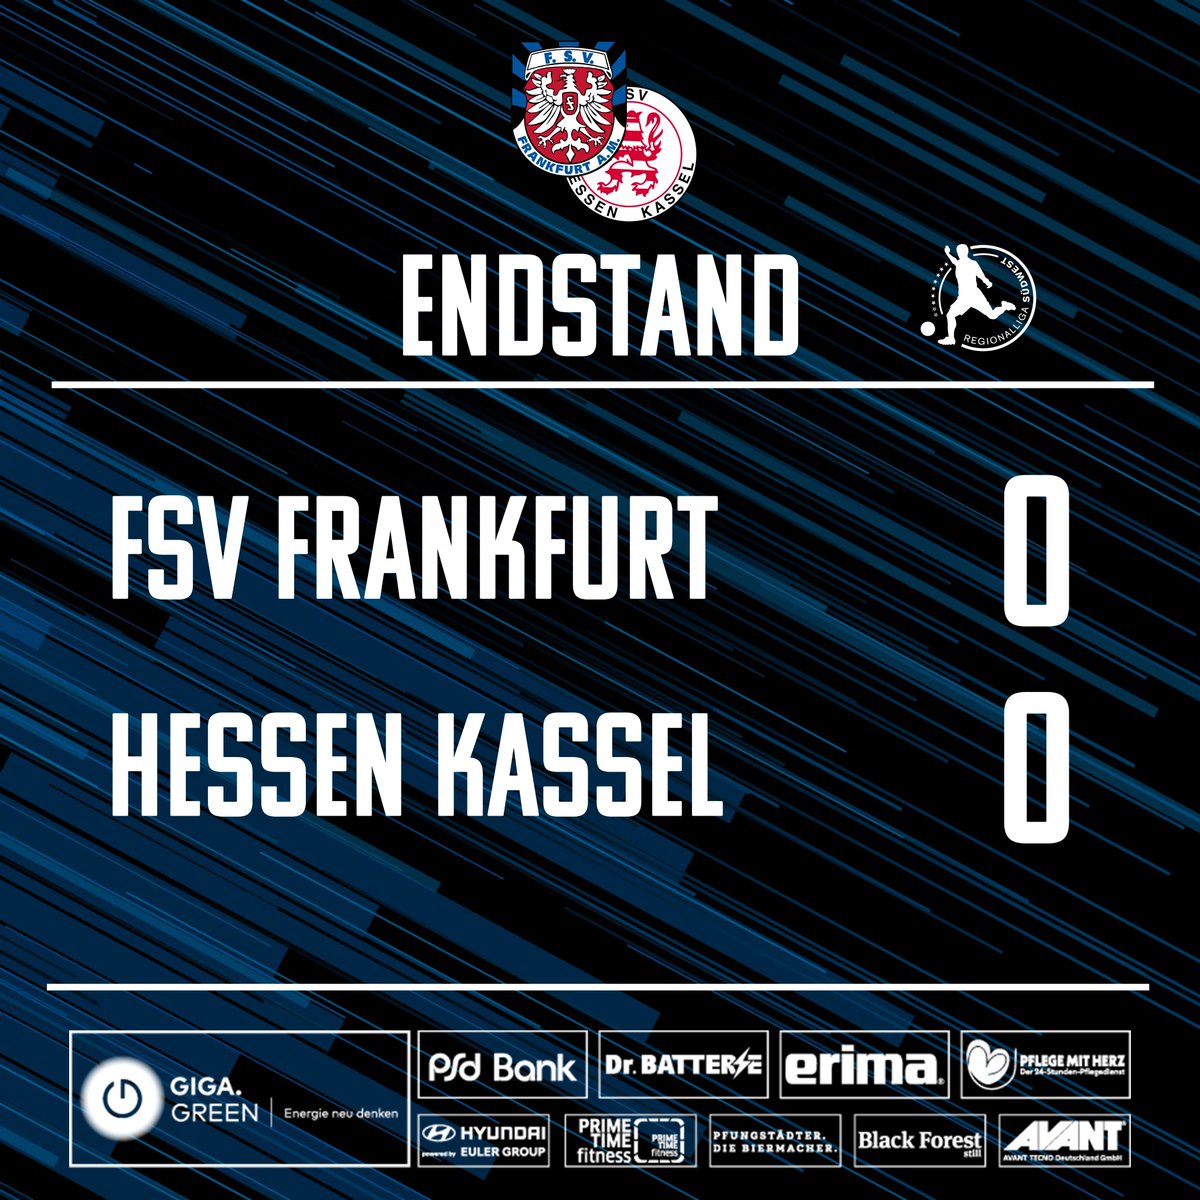 Das Auswärtsspiel in Kassel endet torlos.

#WIRsindFSV #FSVFrankfurt #KSVFSV